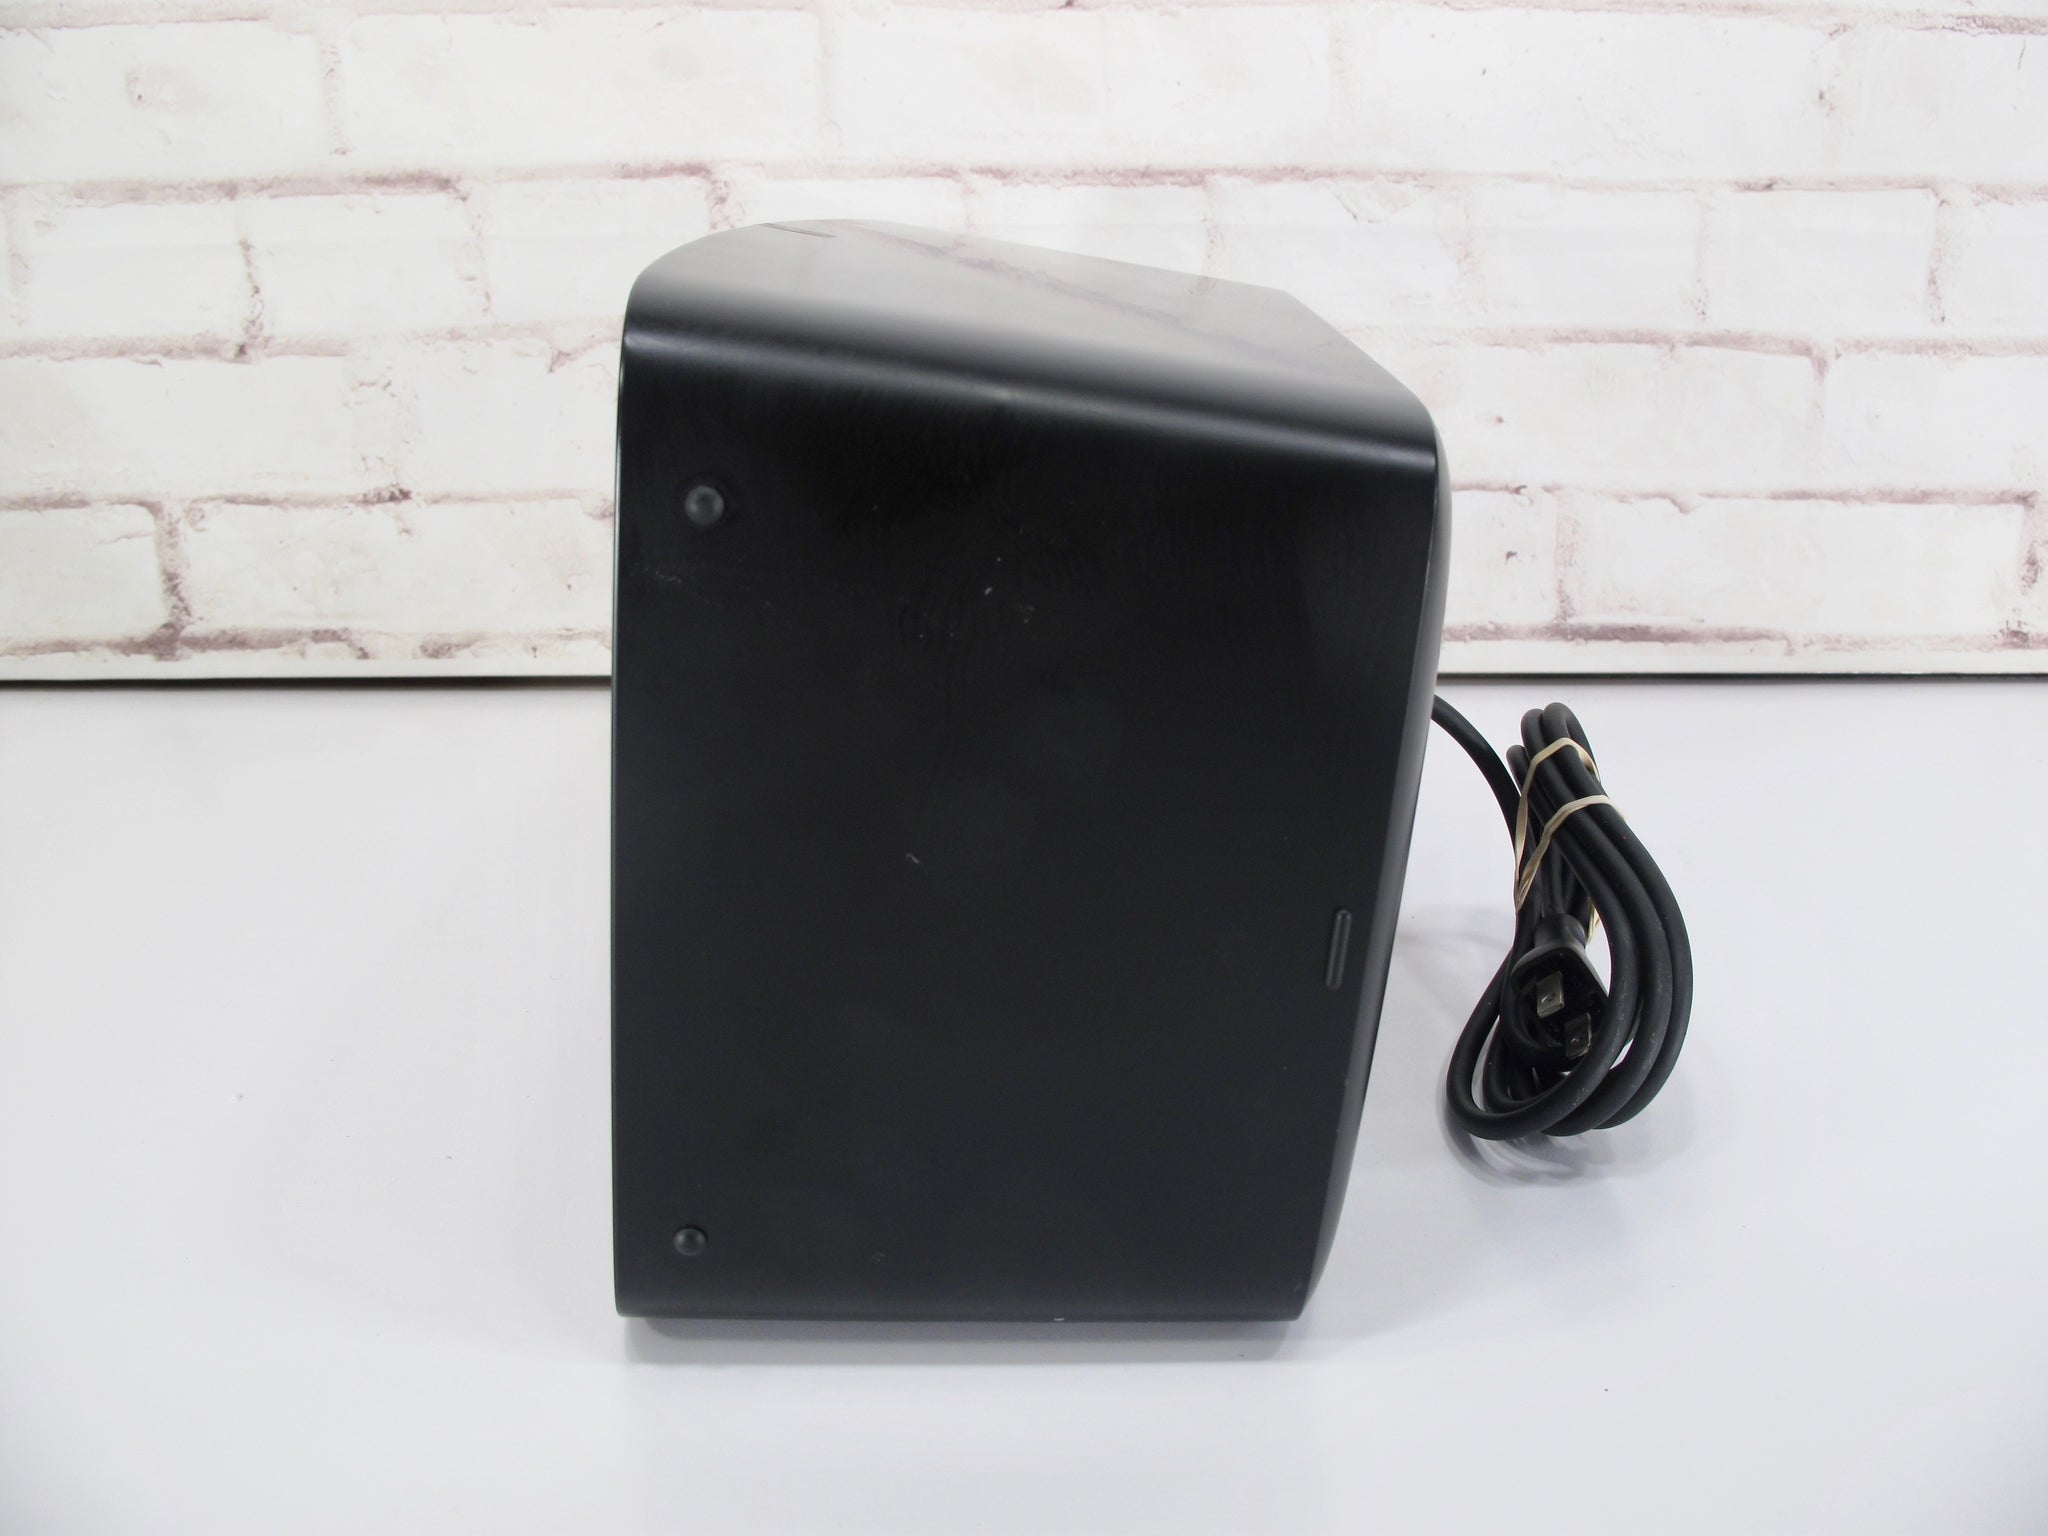 Sonos Play:5 S100 Gen 2 Network Streaming Smart Speaker Black